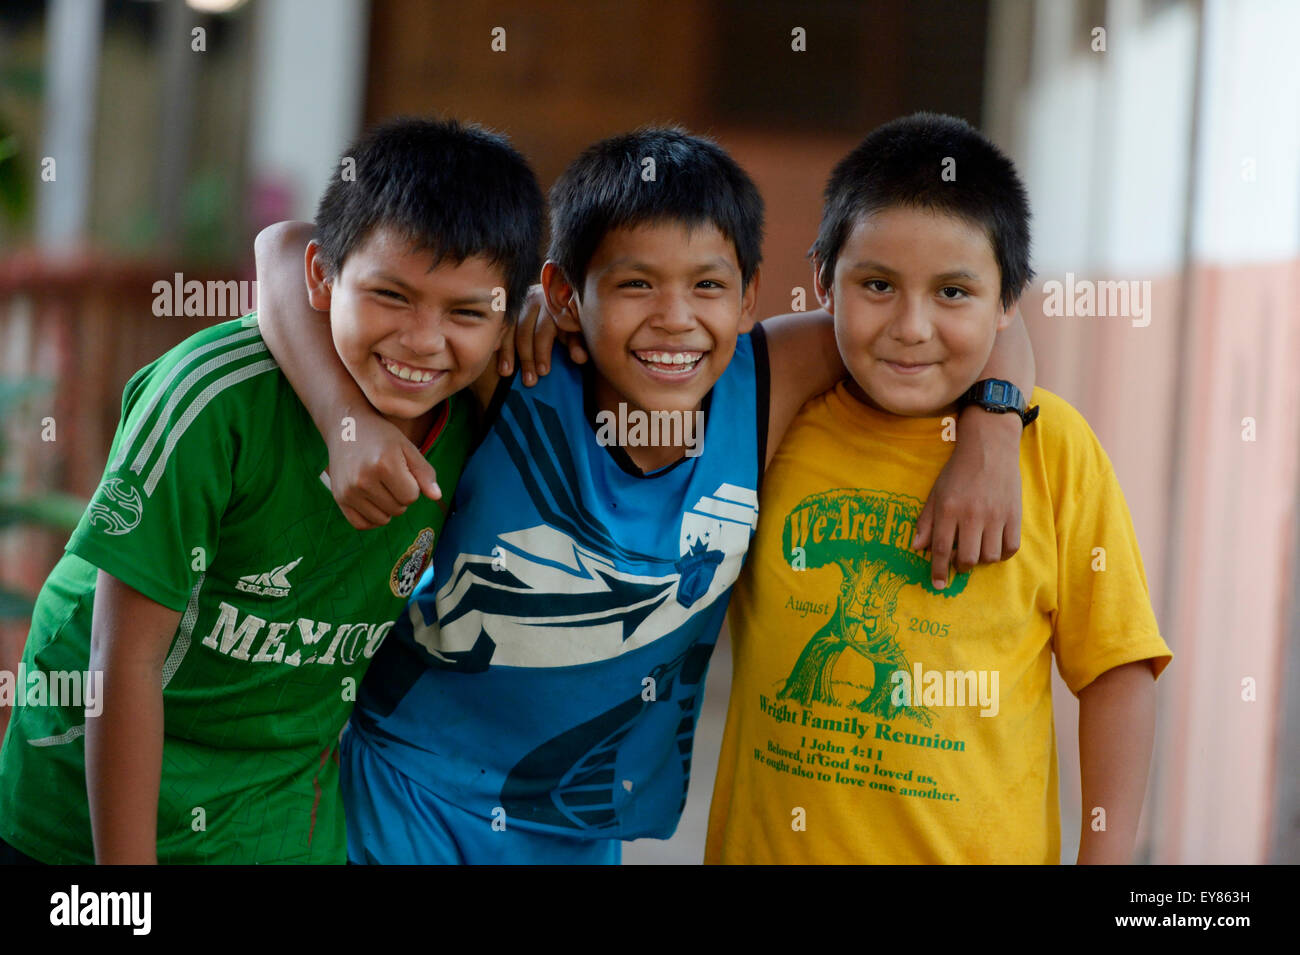 Three boys, friends embracing each other, Puerto Maldonado, Madre de Dios department, Peru Stock Photo